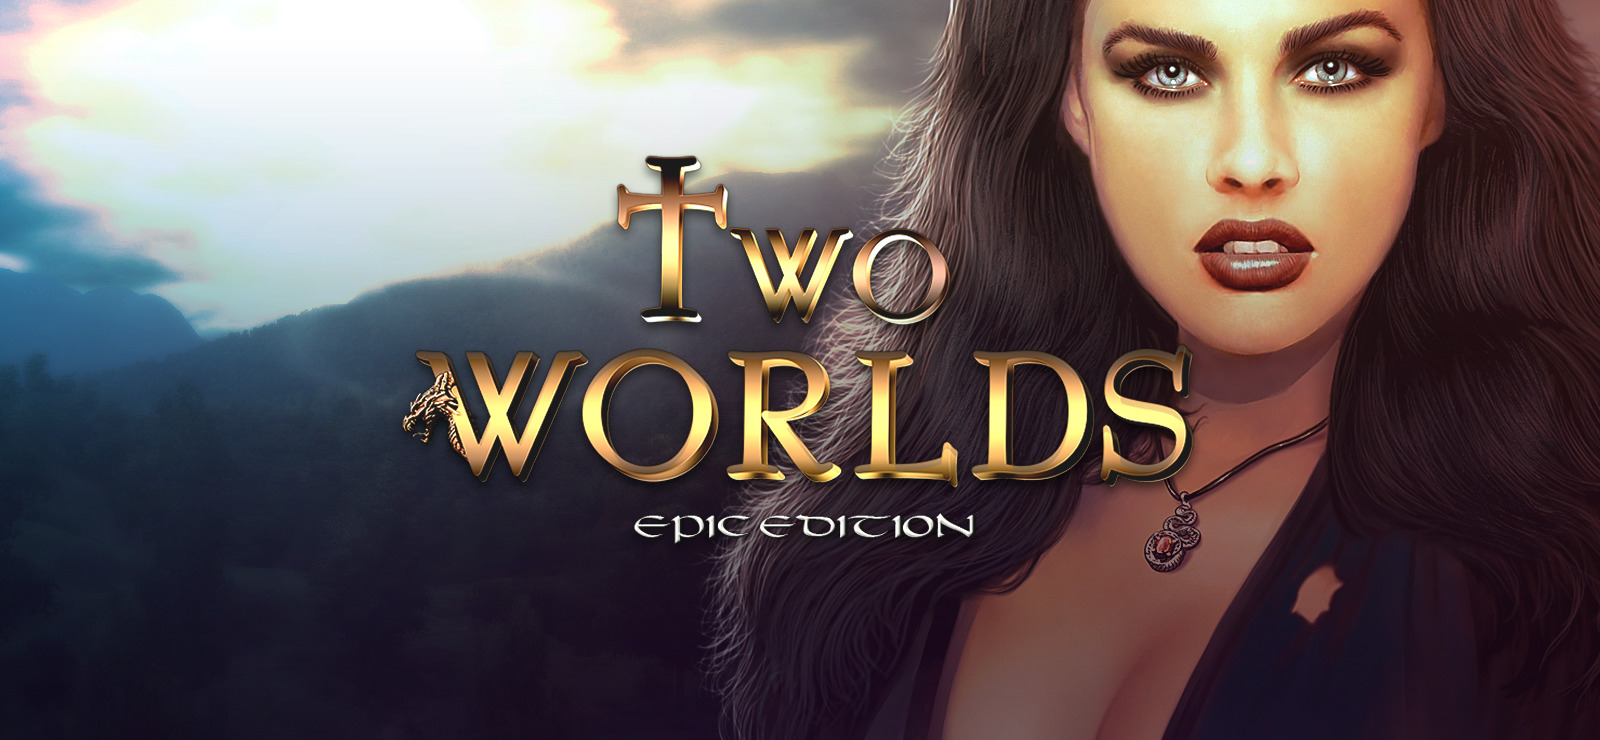 two worlds 2 grafik mod